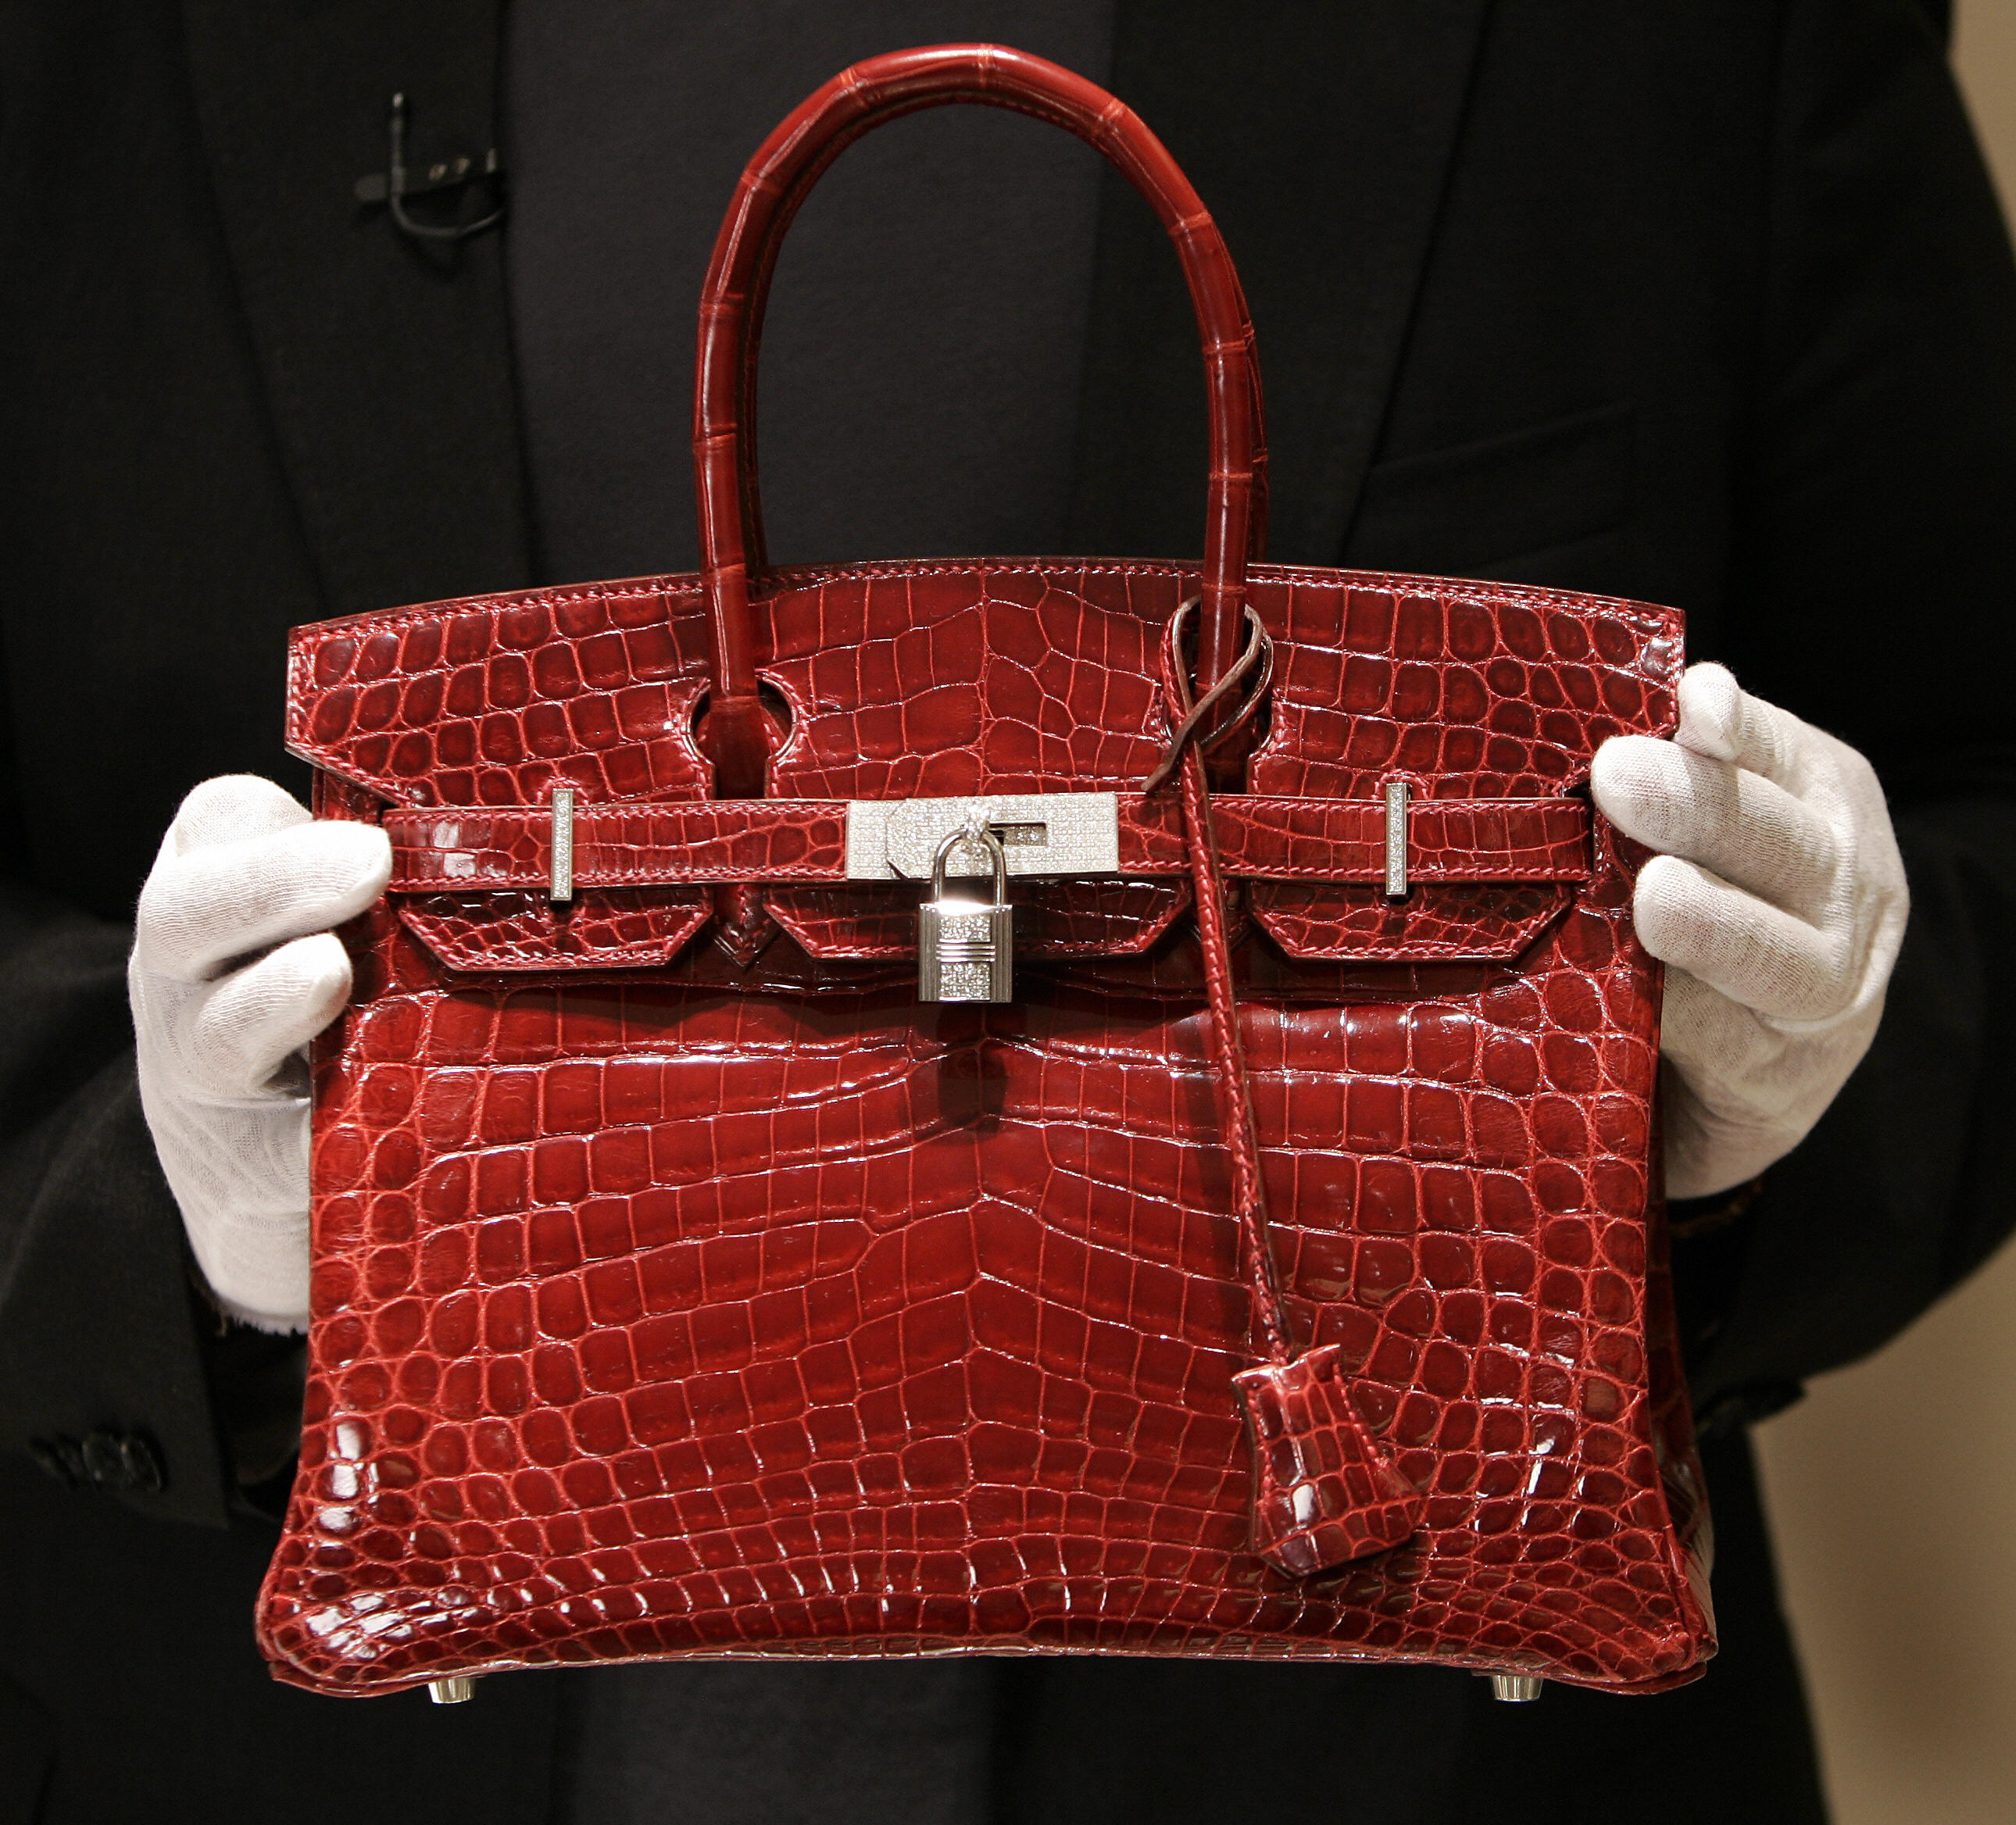 That $7,000 Hermes Birkin bag will now set you back $8,000